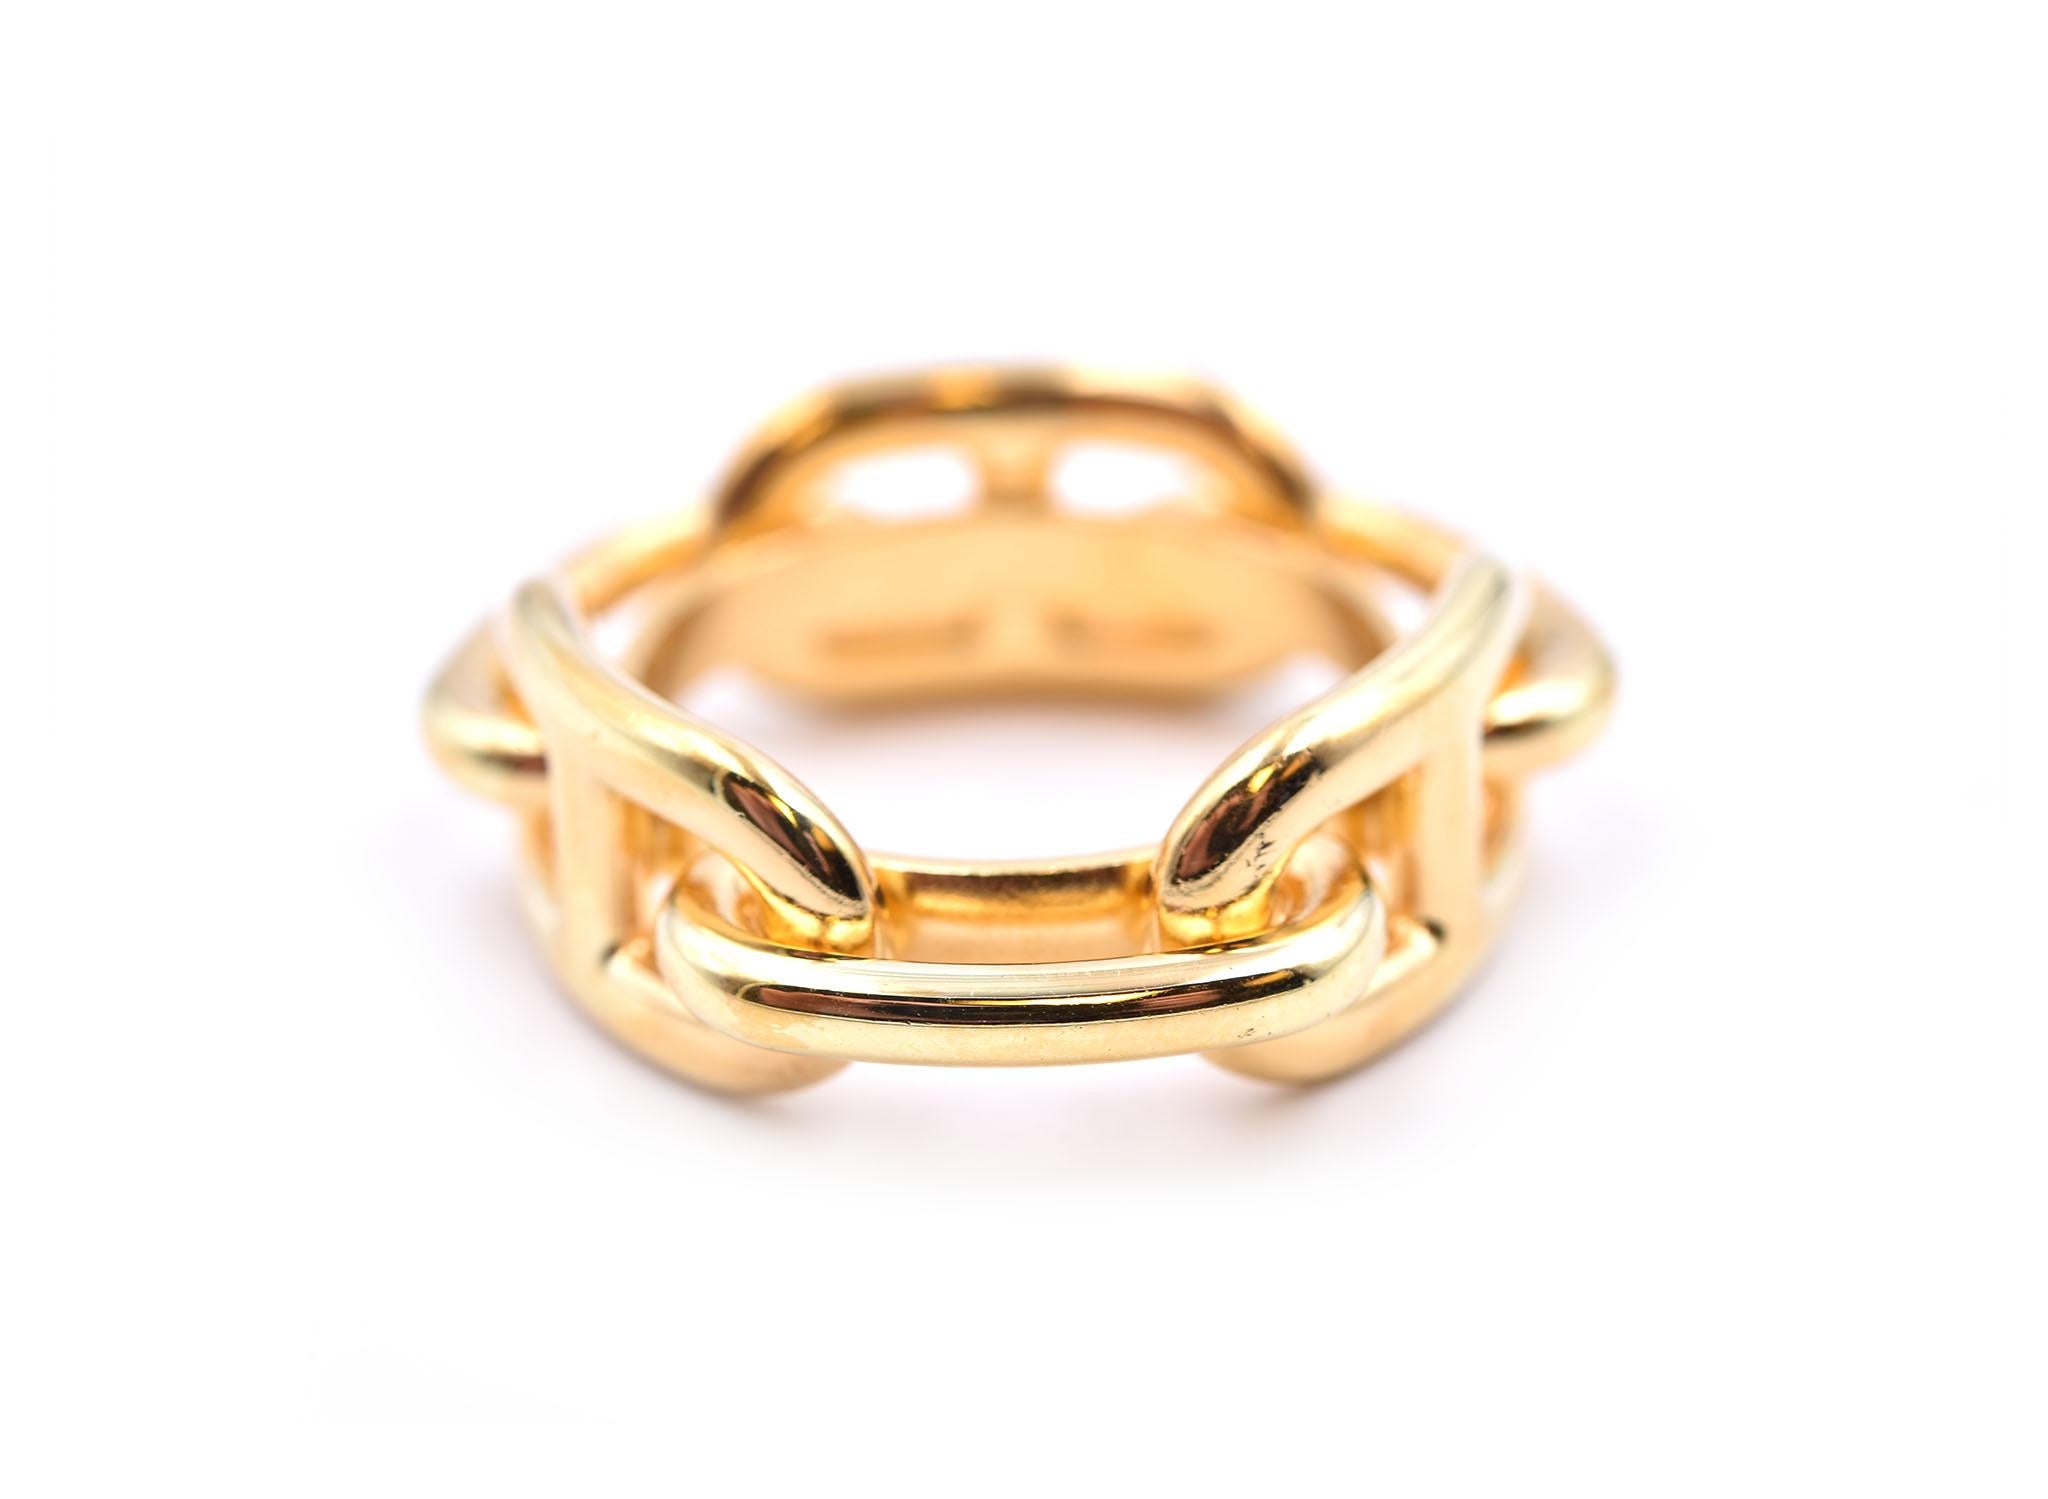 Designer: Hermes
Material: gold plated 
Dimensions: ring measures 20.80mm in diameter
Weight: 11.35 grams
